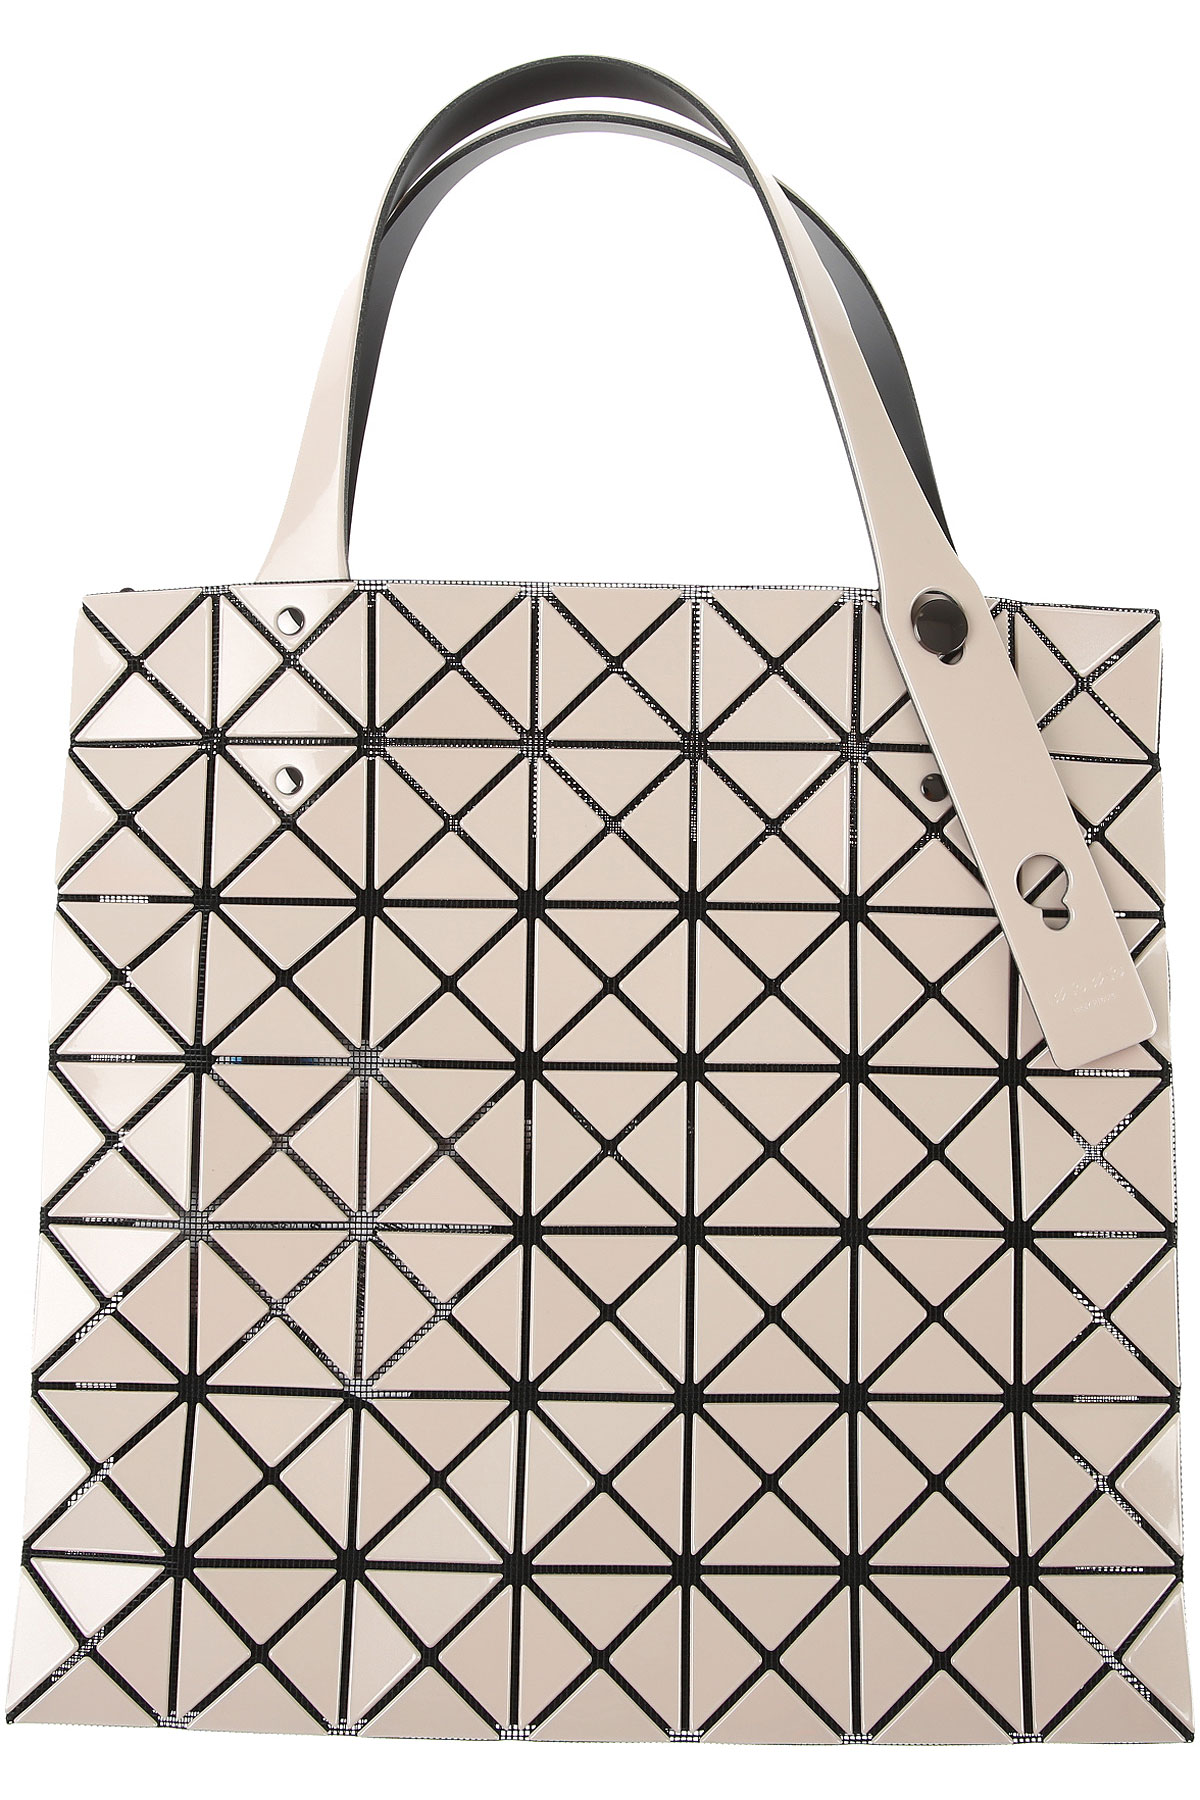 Handbags Issey Miyake, Style code: bb18ag047-40-